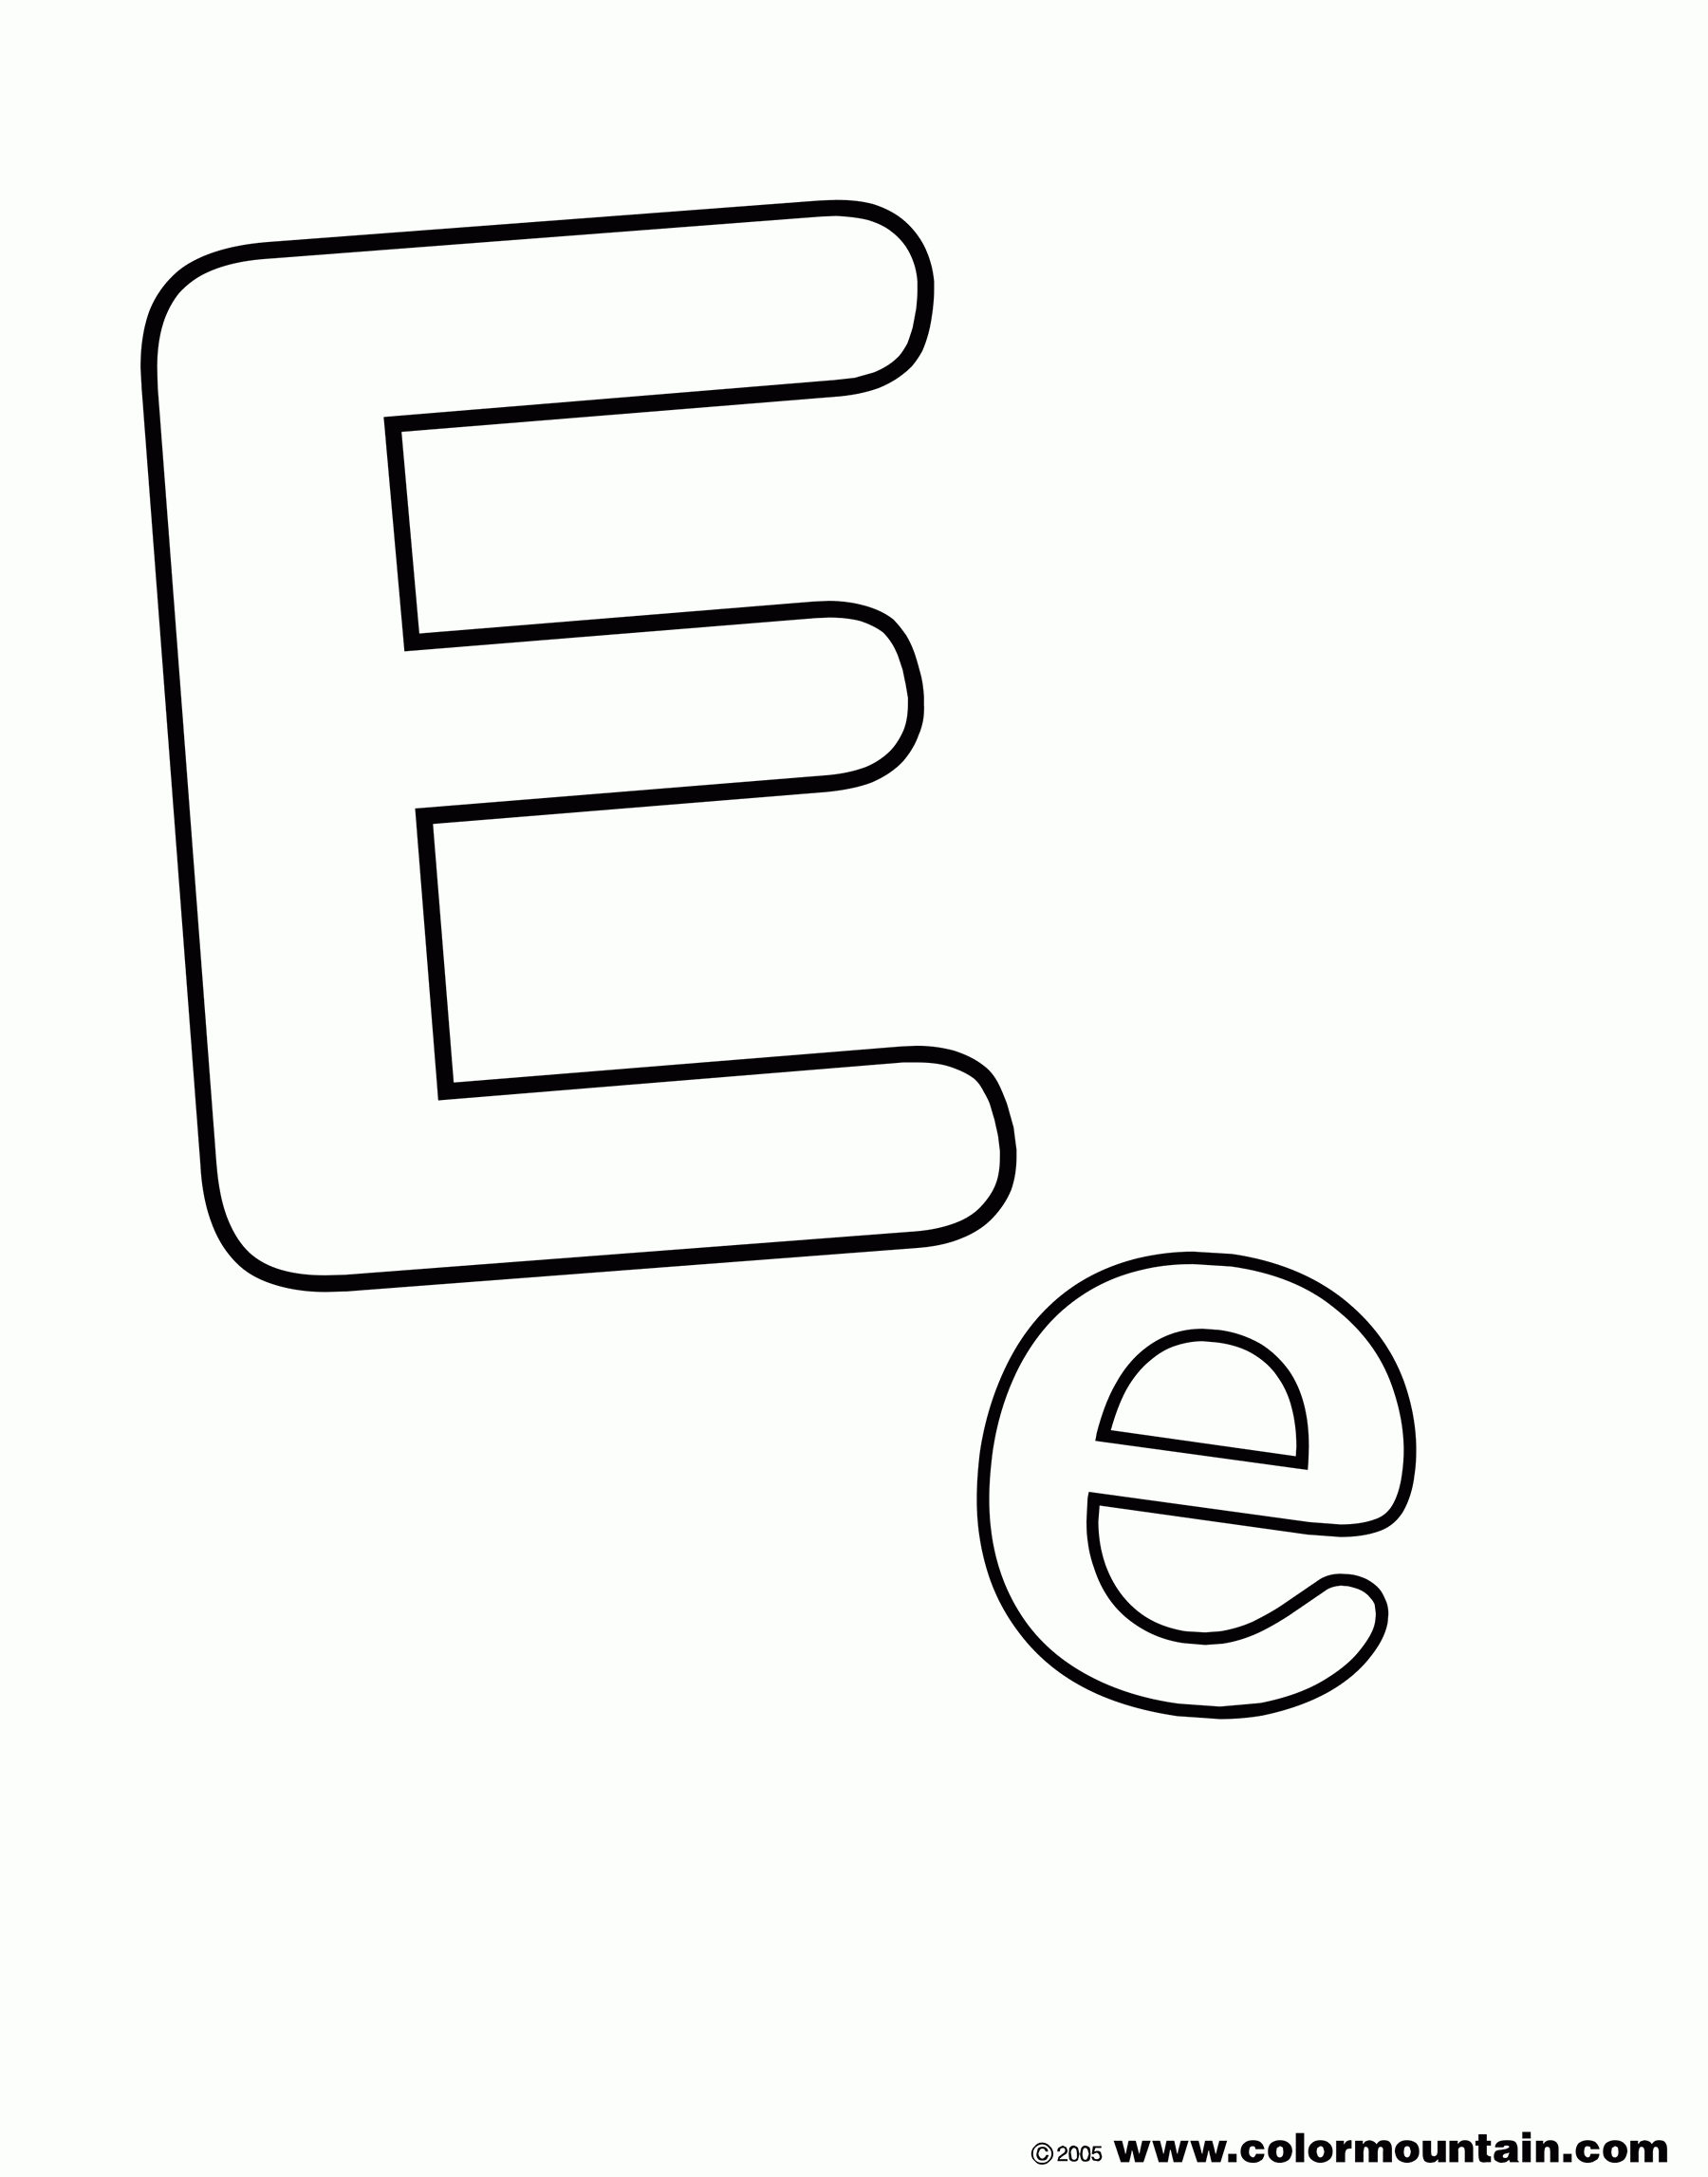 Letter E Coloring Sheet - Create A Printout Or Activity